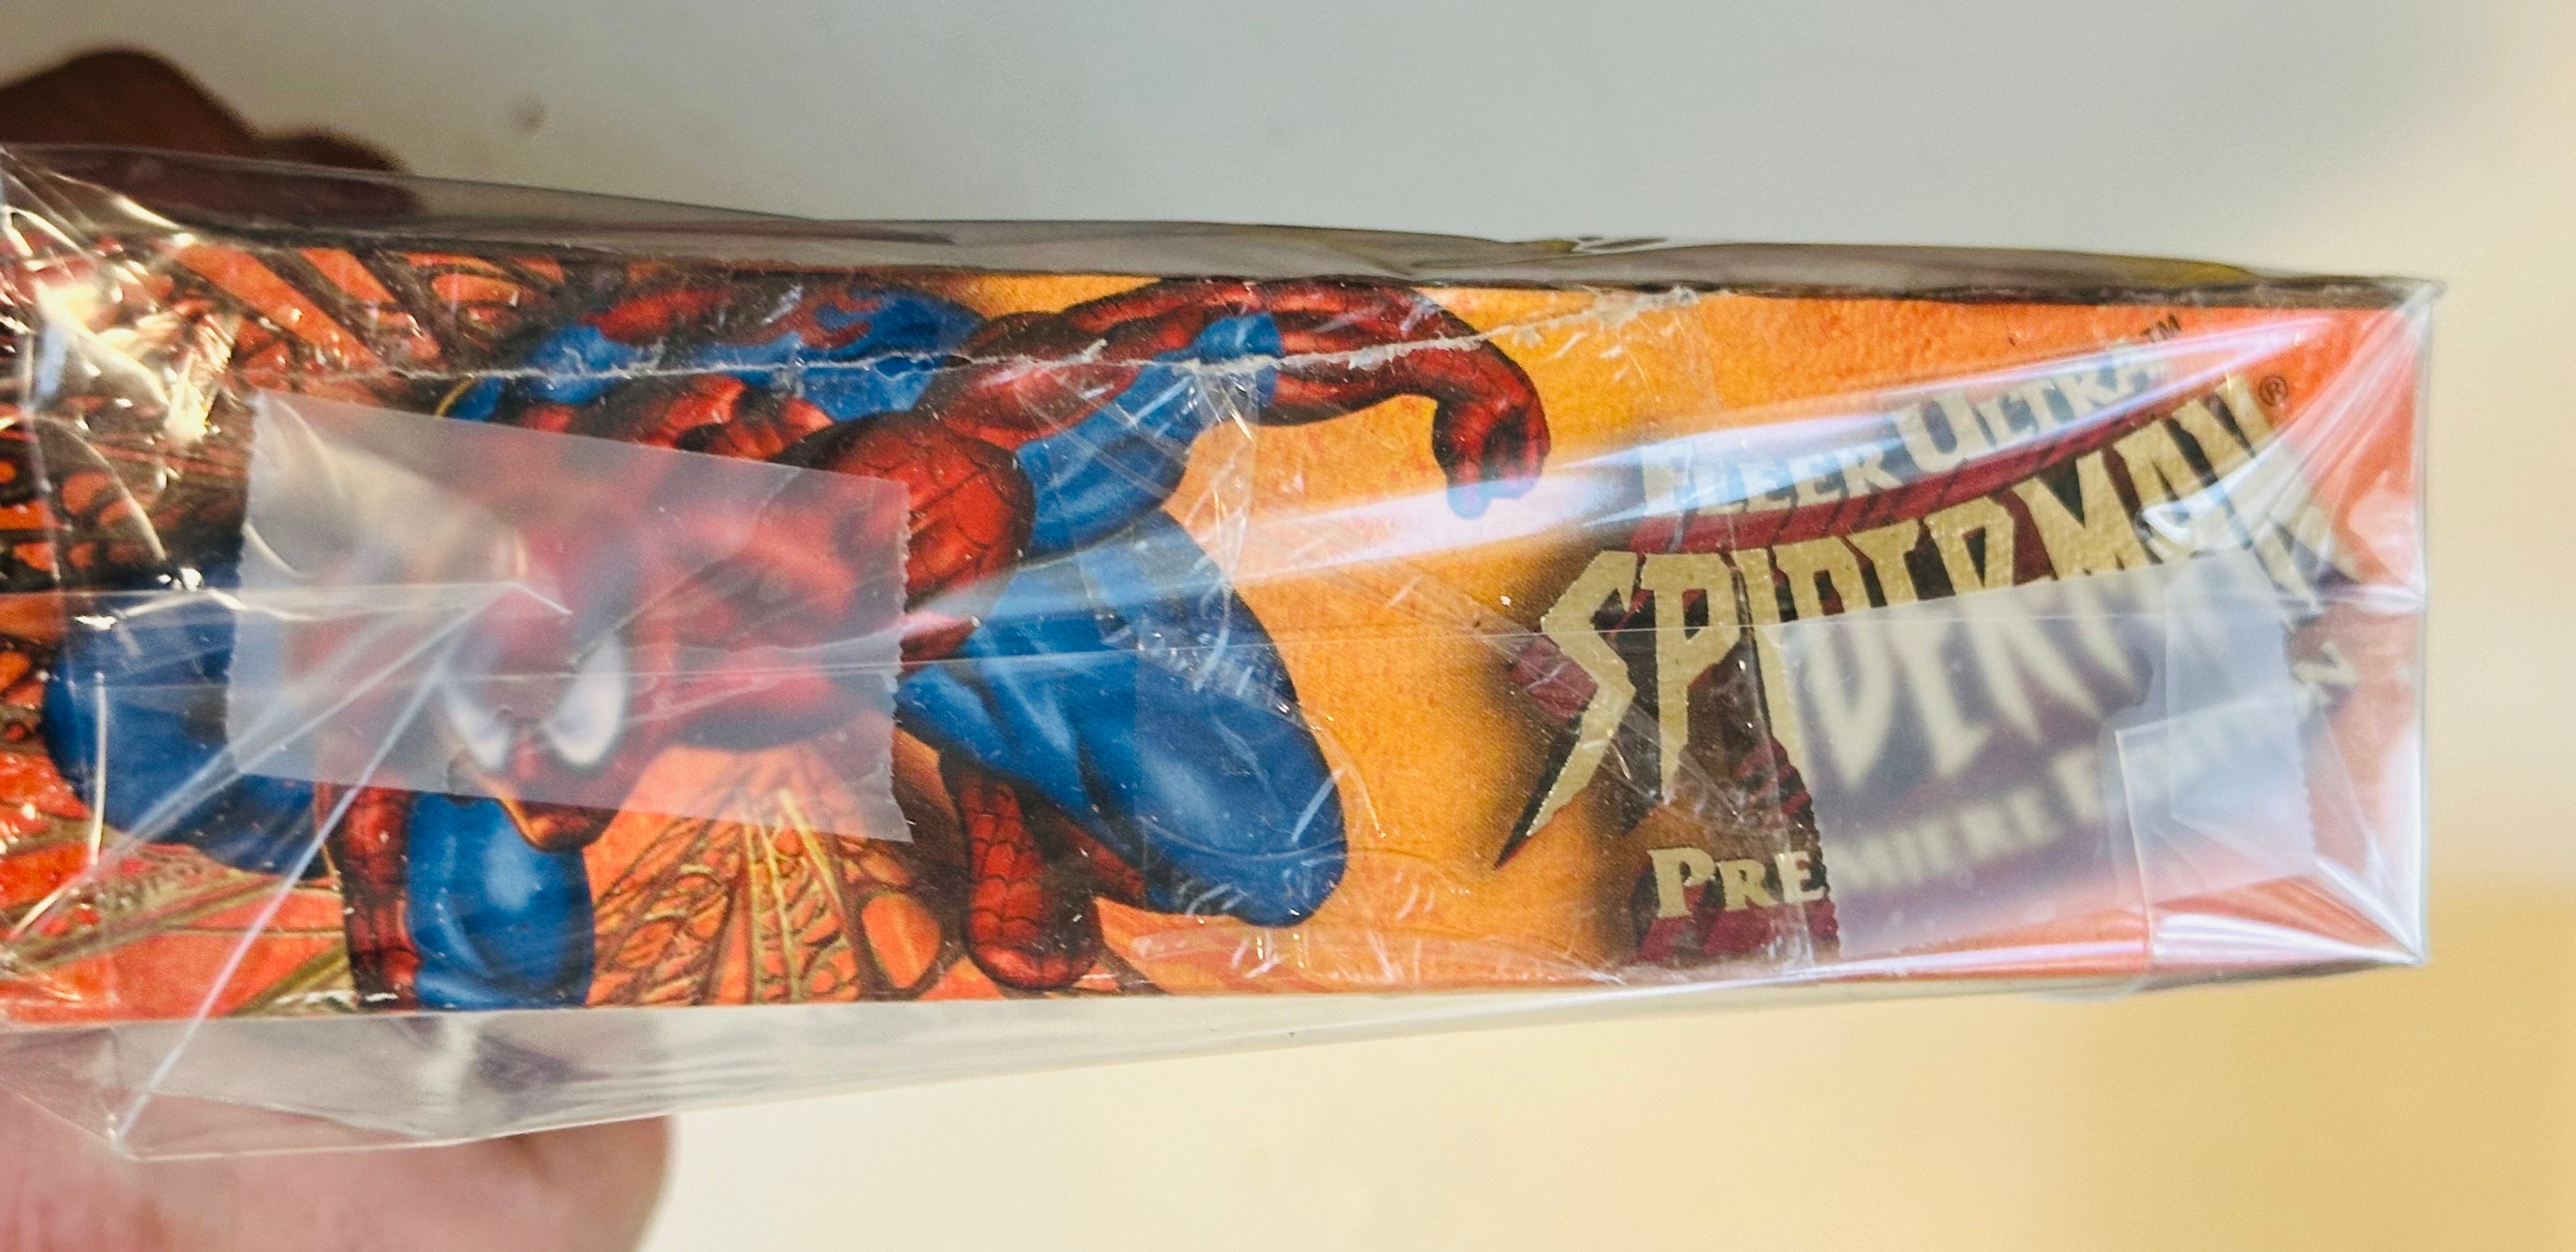 Fleer Ultra Spider-man cards rare 36 sealed packs box 1995